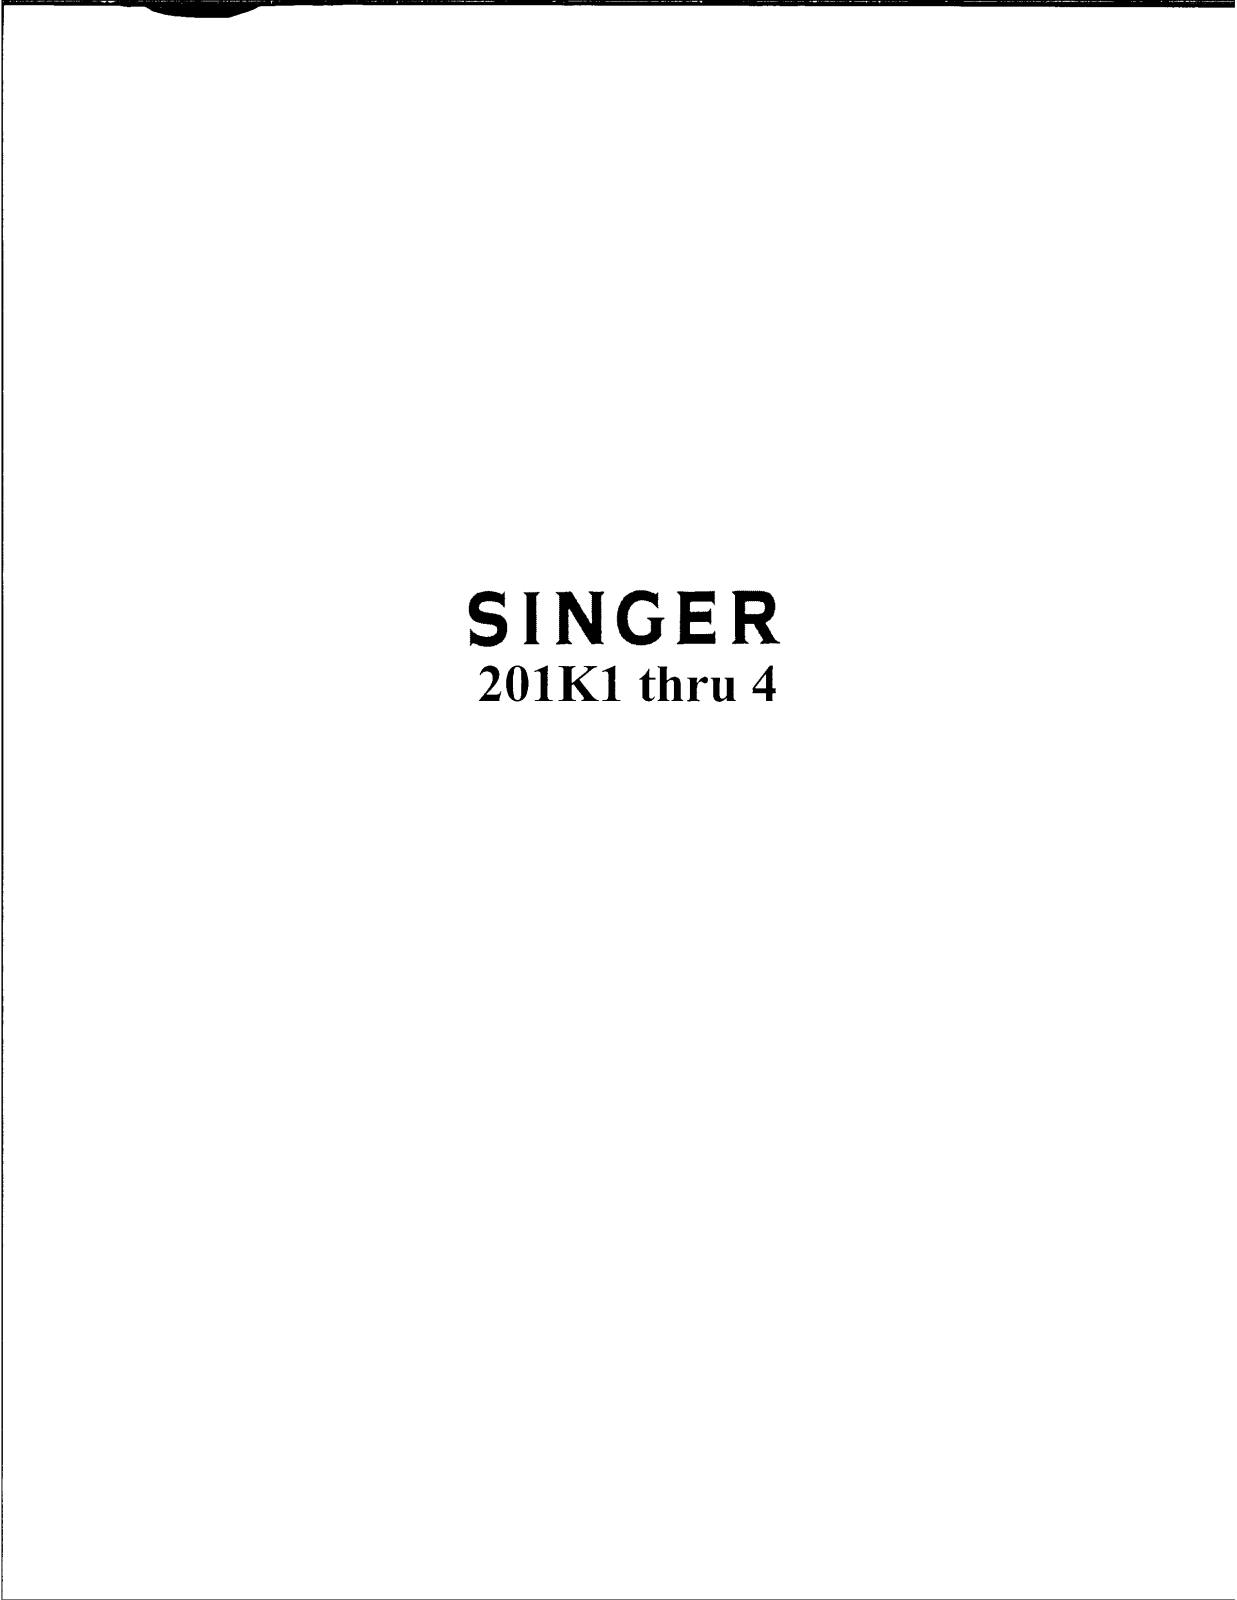 Singer 201K1 Parts List